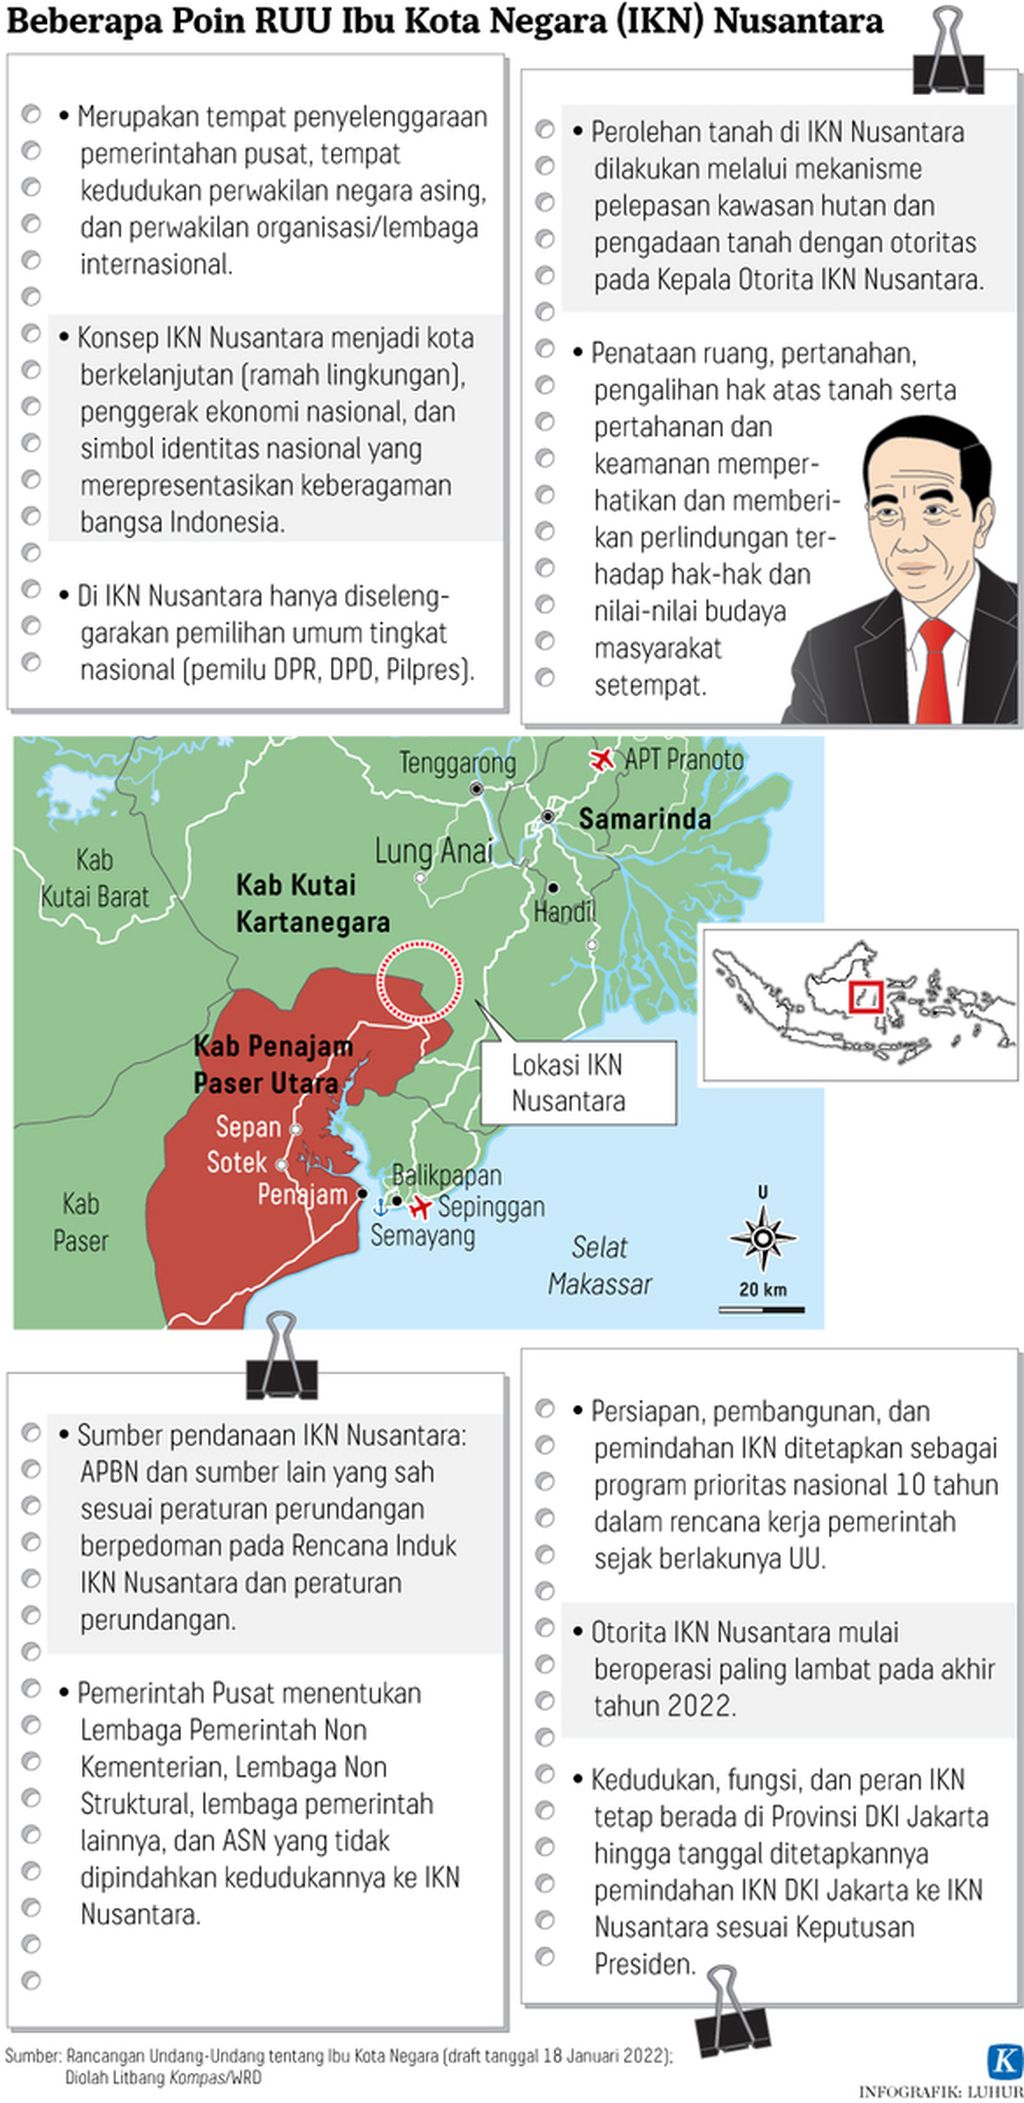 Infografik Beberapa Poin RUU Ibu Kota Negara (IKN) Nusantara